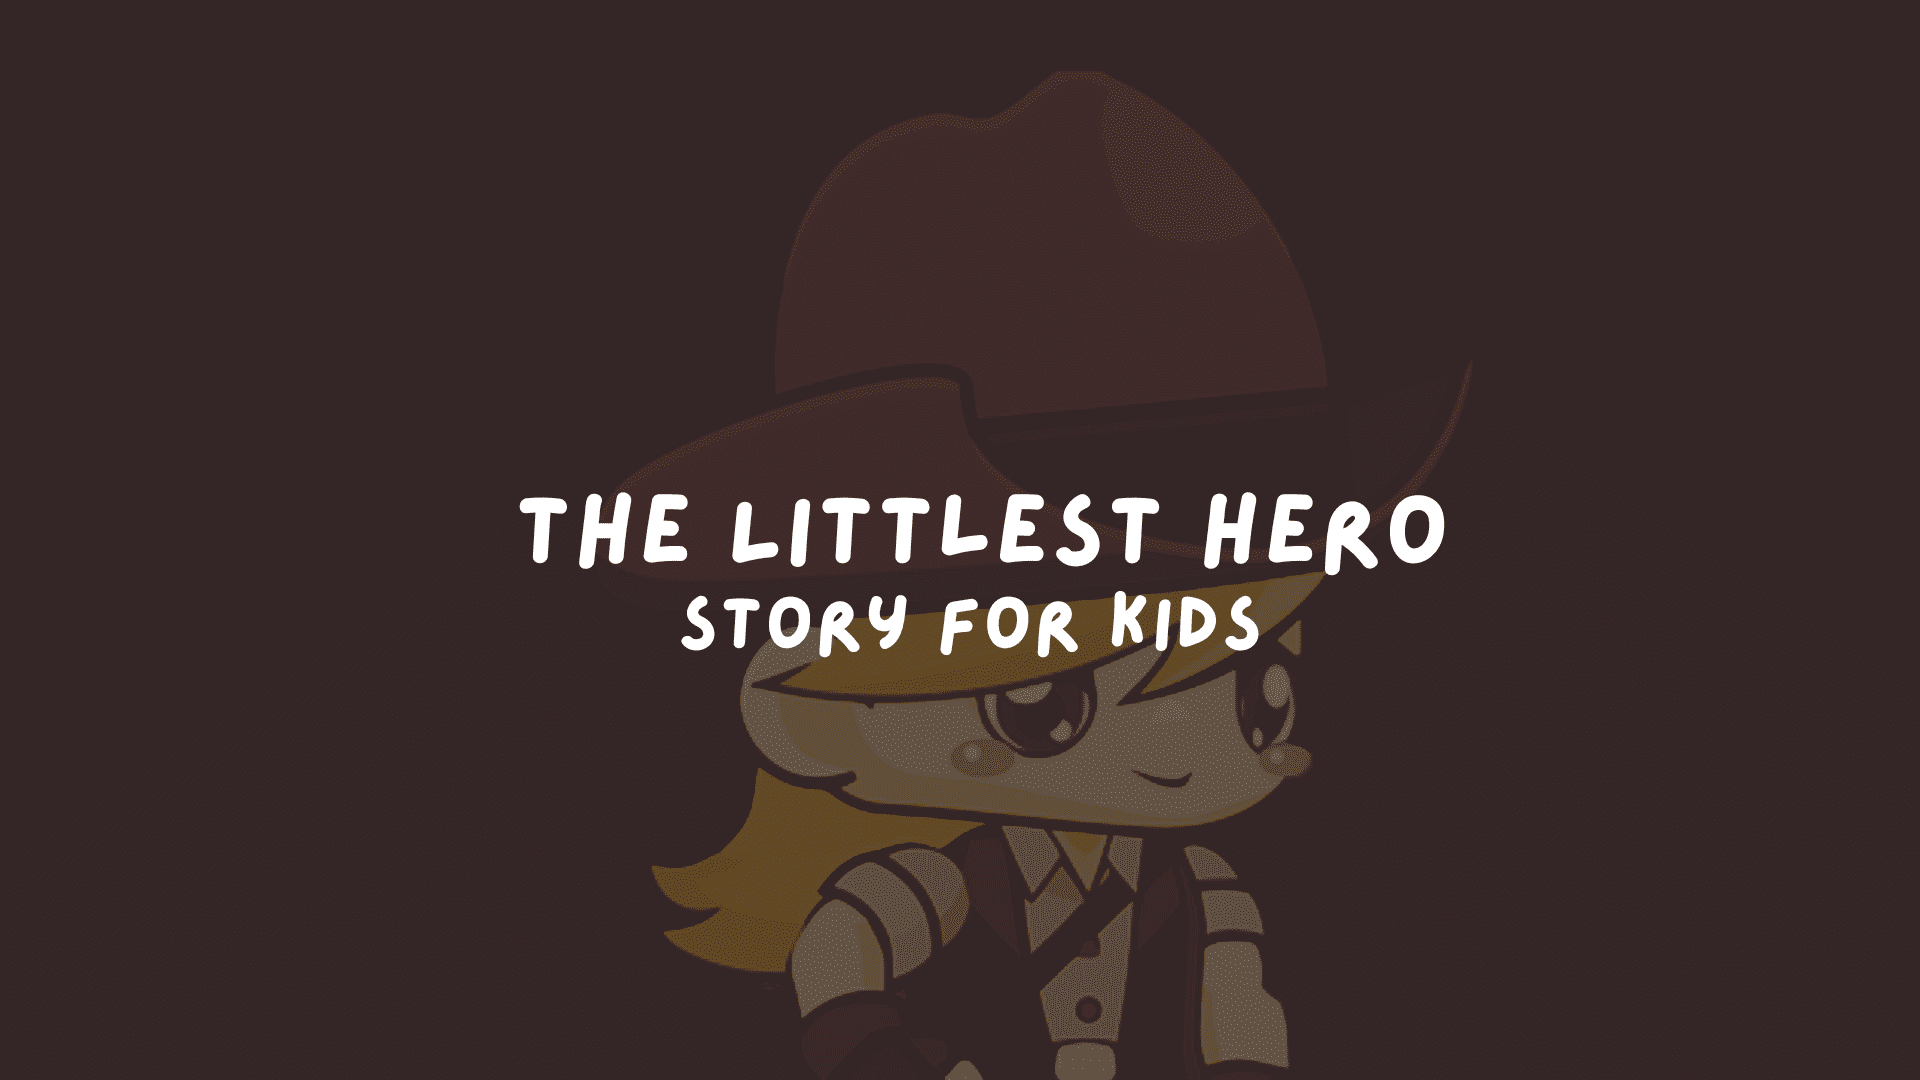 the littlest hero story for kids cover image